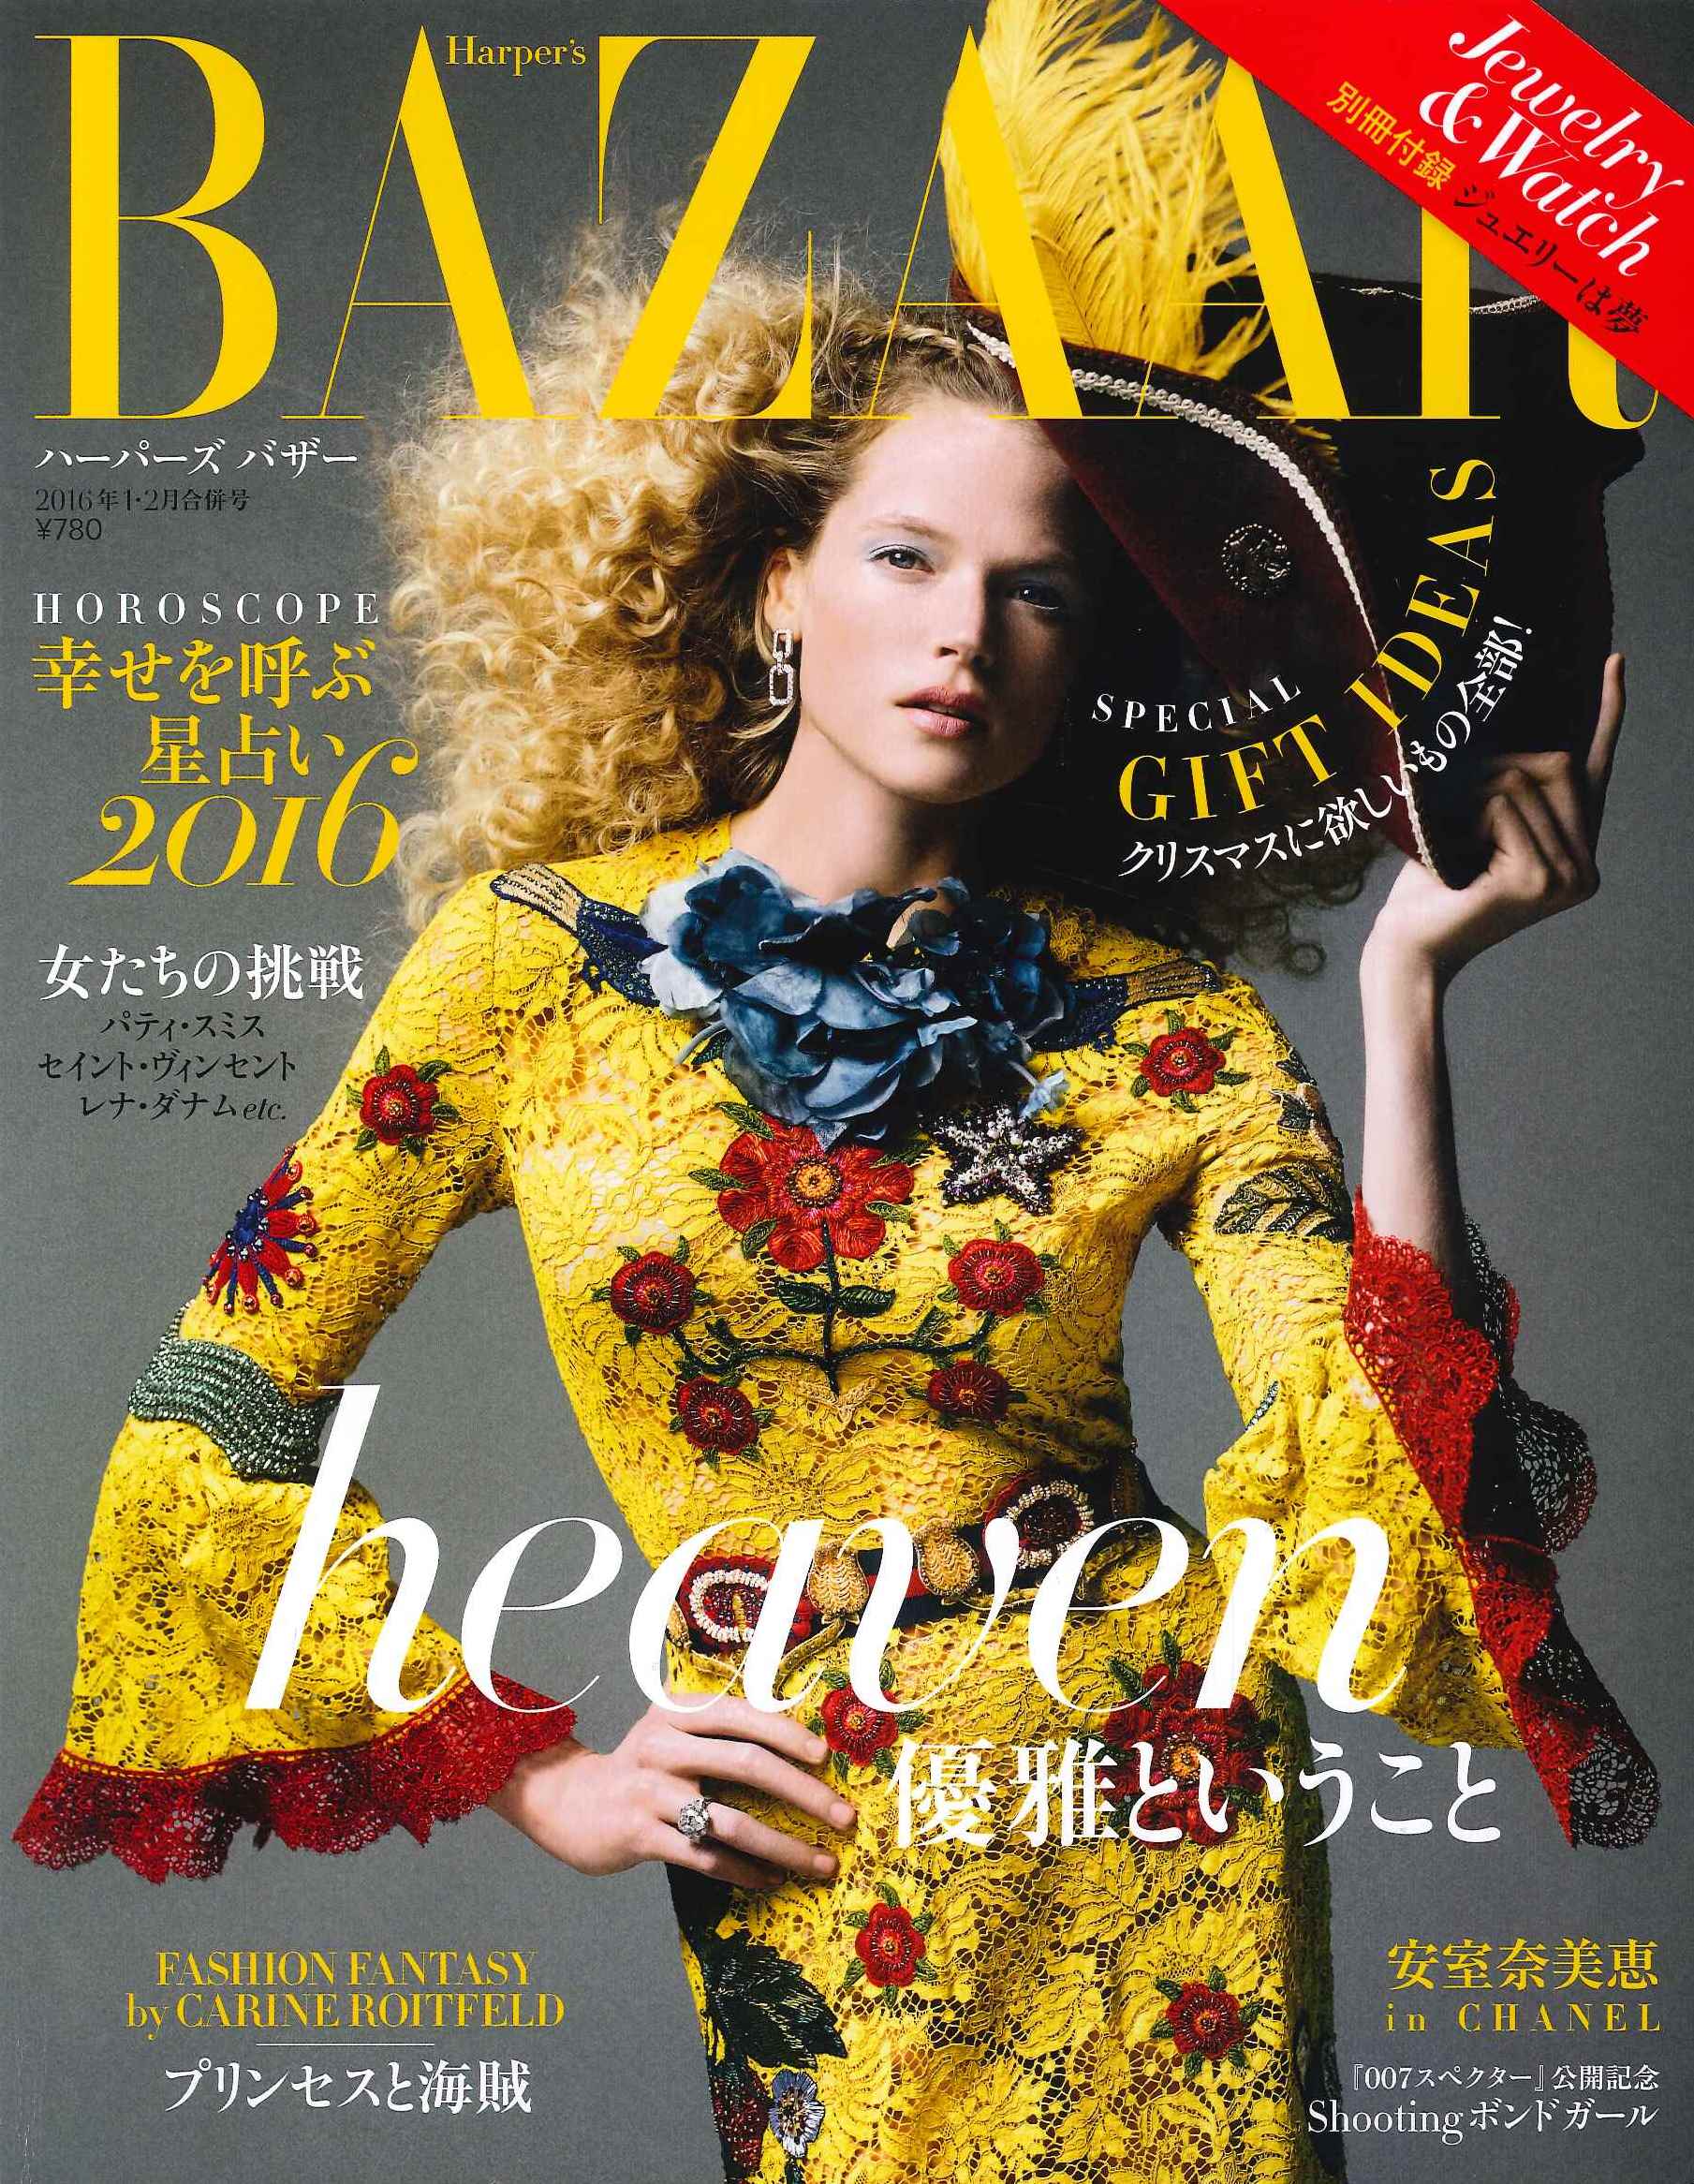 Harpers-BAZAAR-Jan-Feb-cover